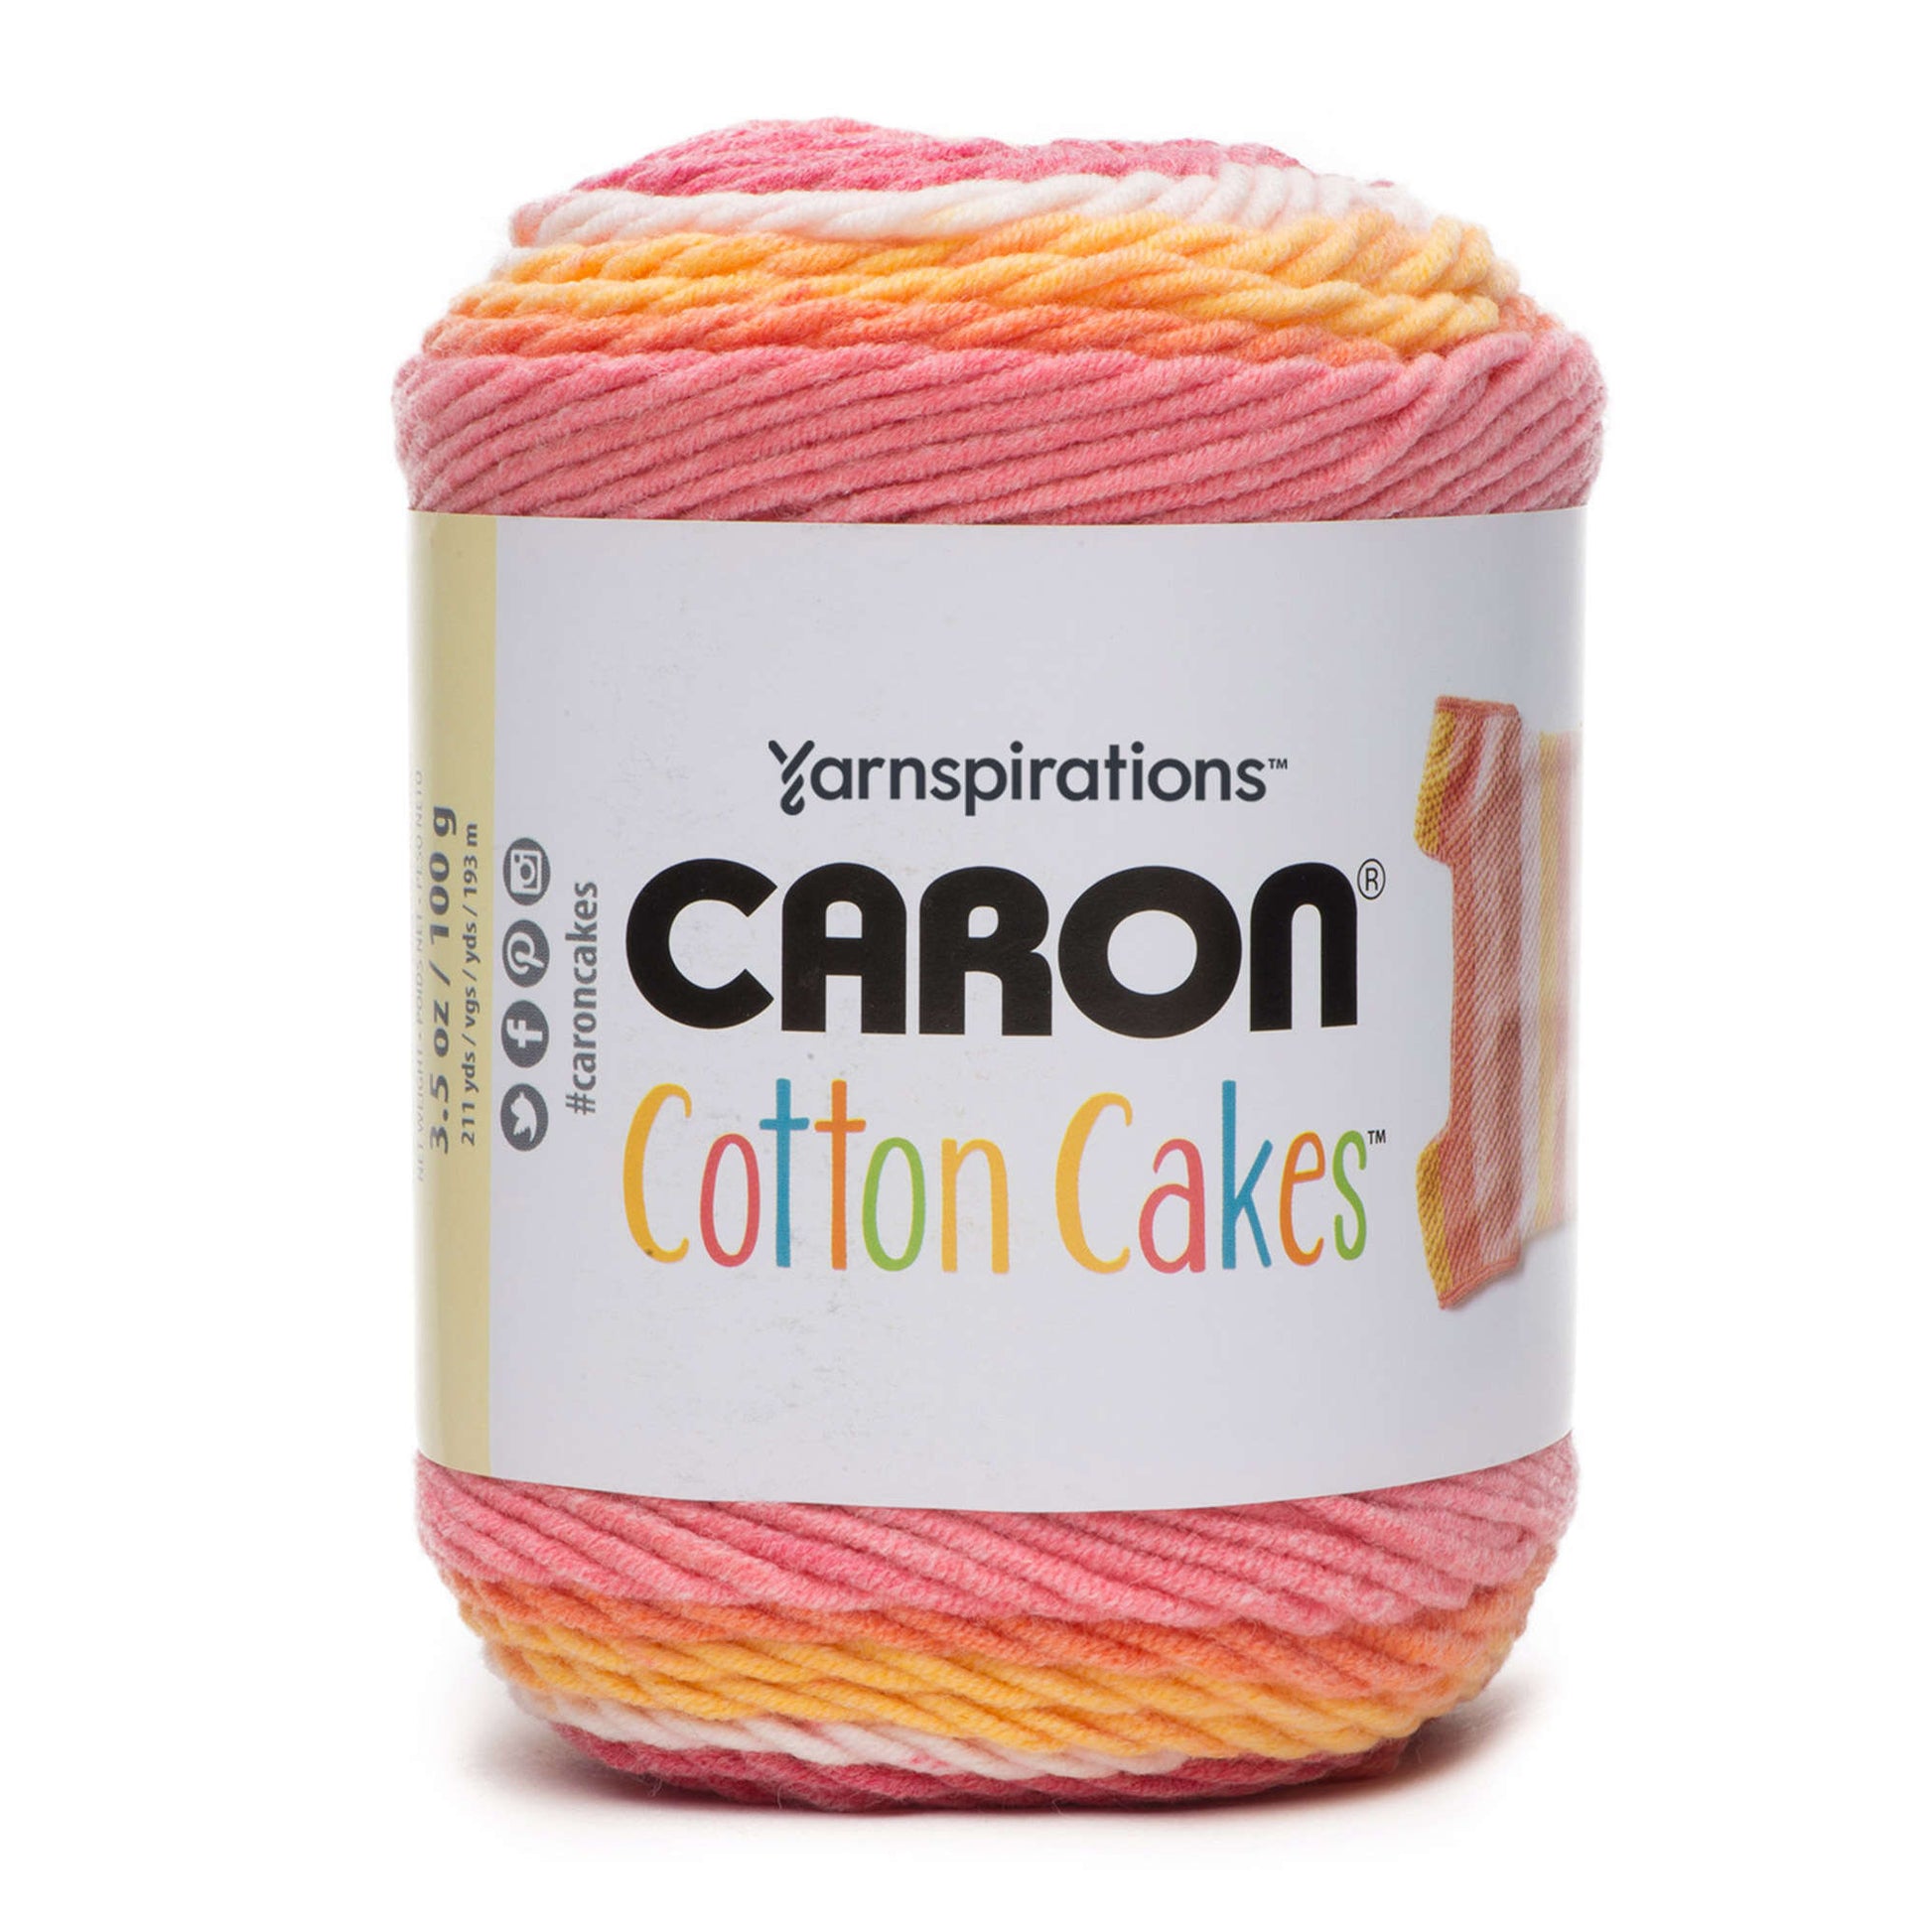 Cotton Cake Yarn Comparison: Caron Cotton vs Sugarwheel Cotton